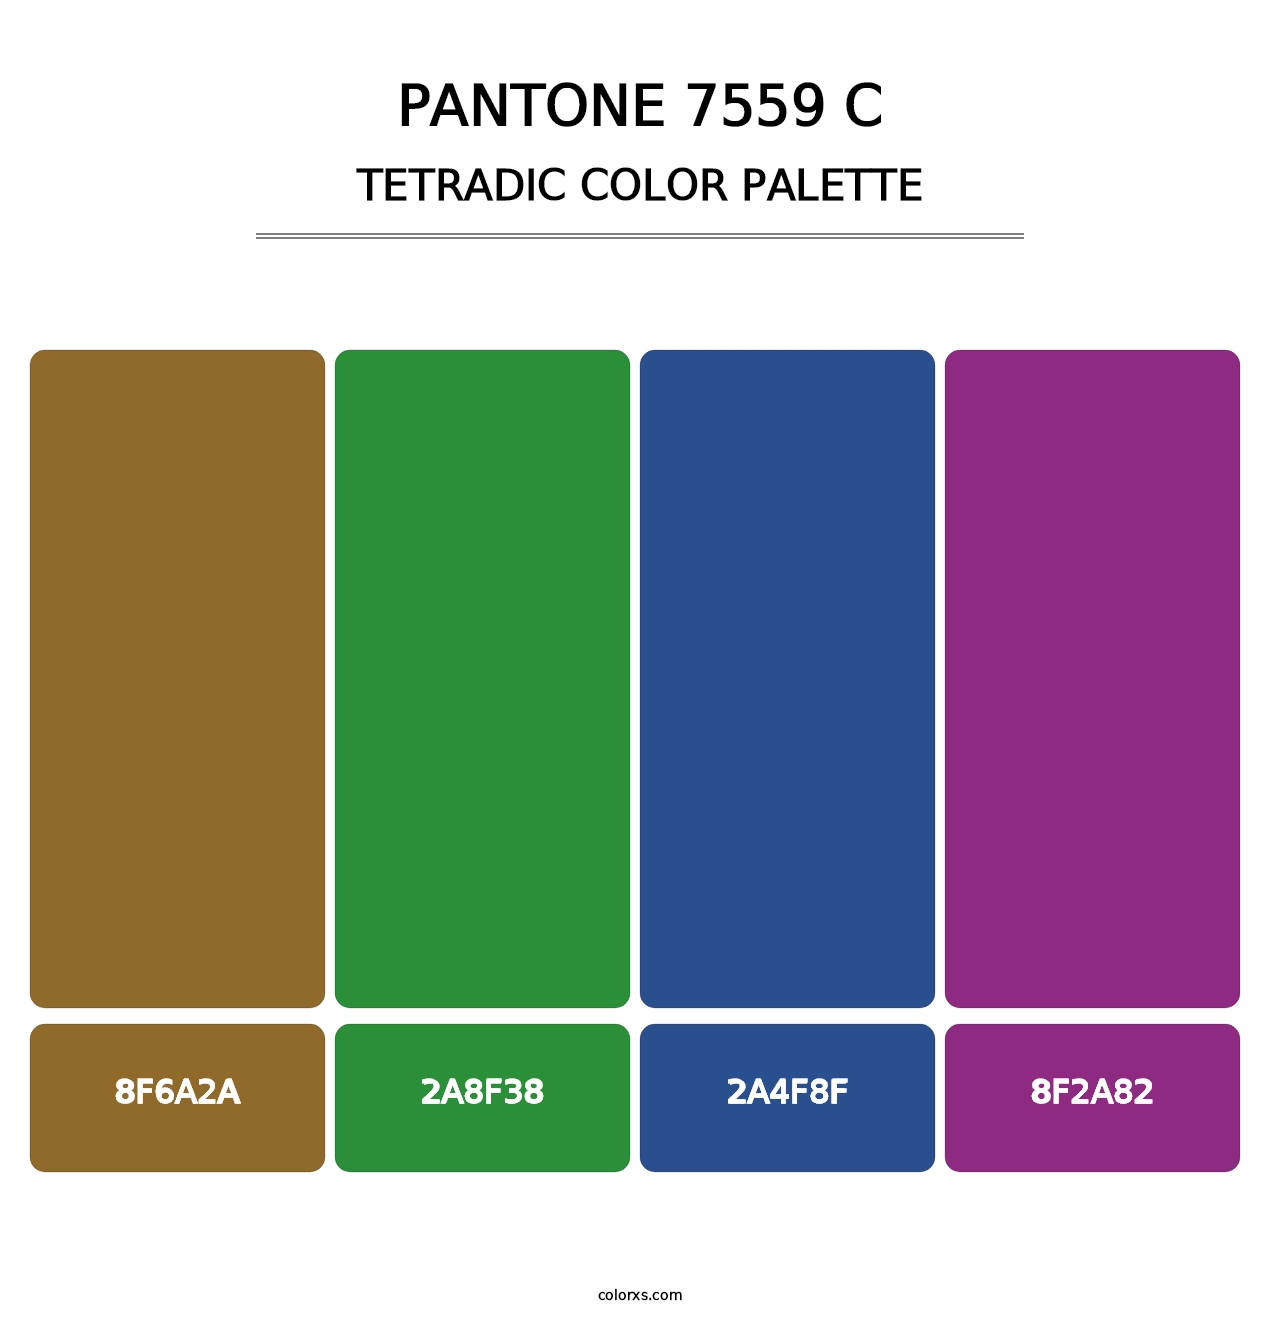 PANTONE 7559 C - Tetradic Color Palette